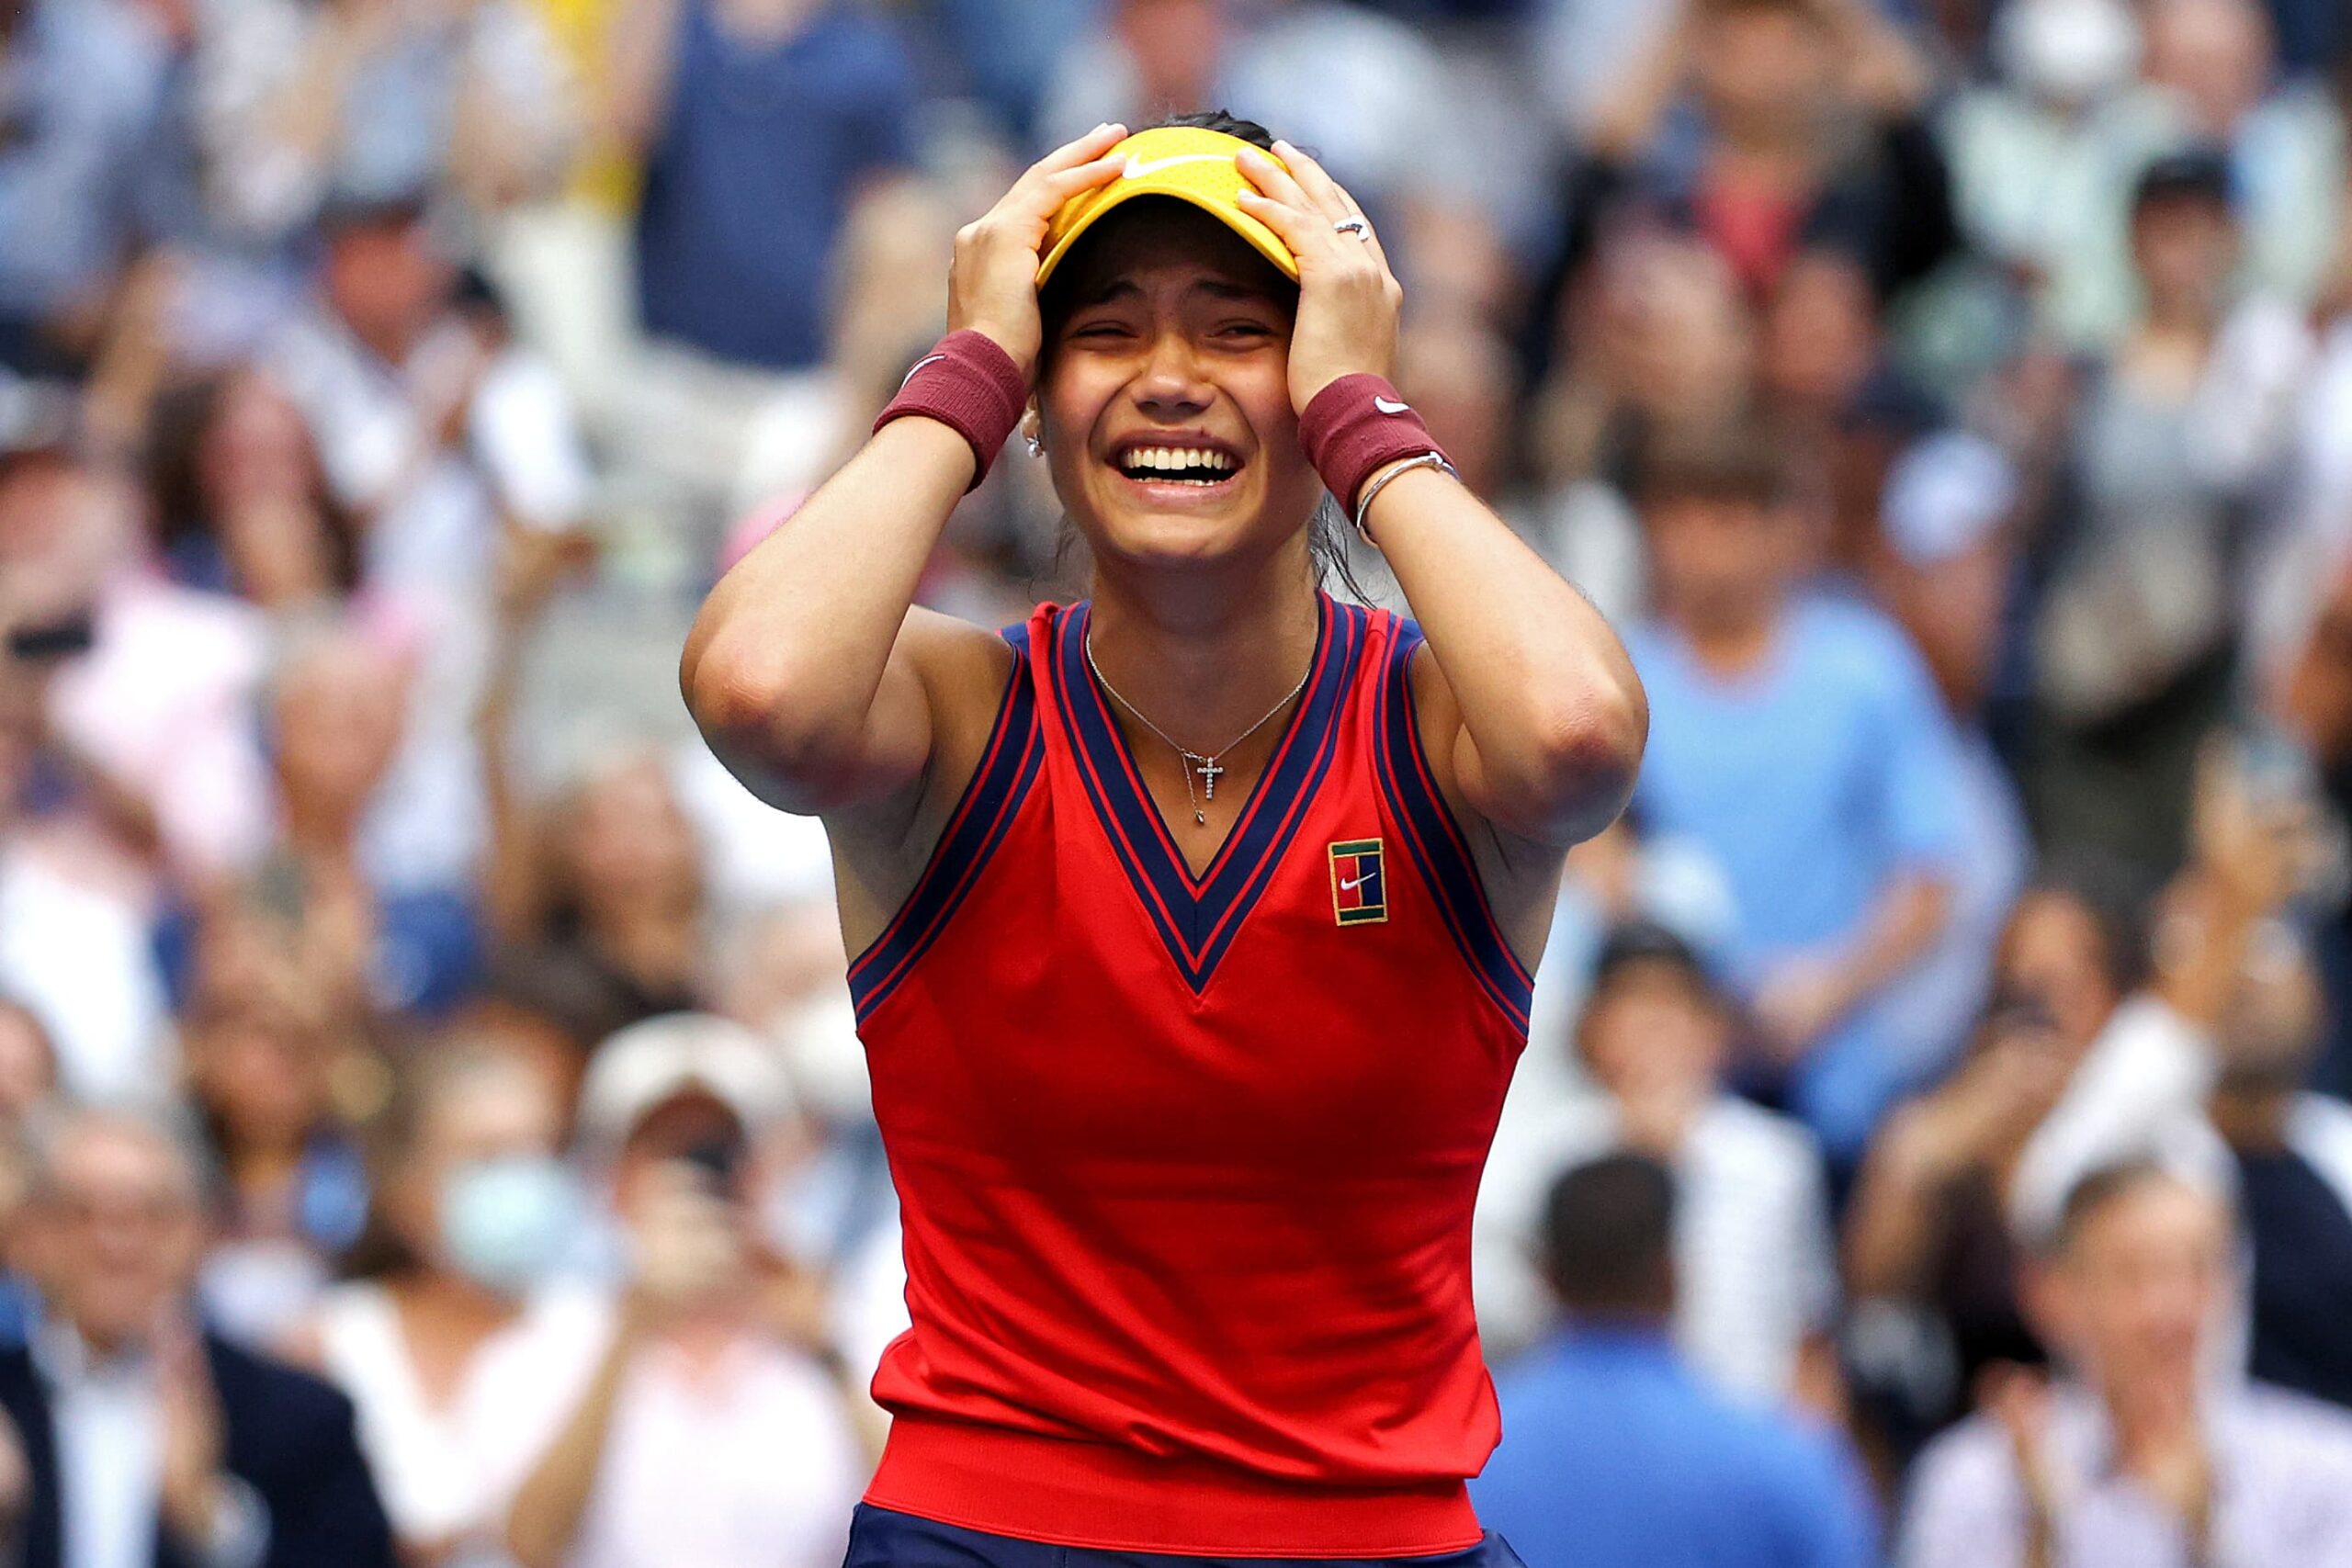 British tennis player wins U.S. Open women’s final